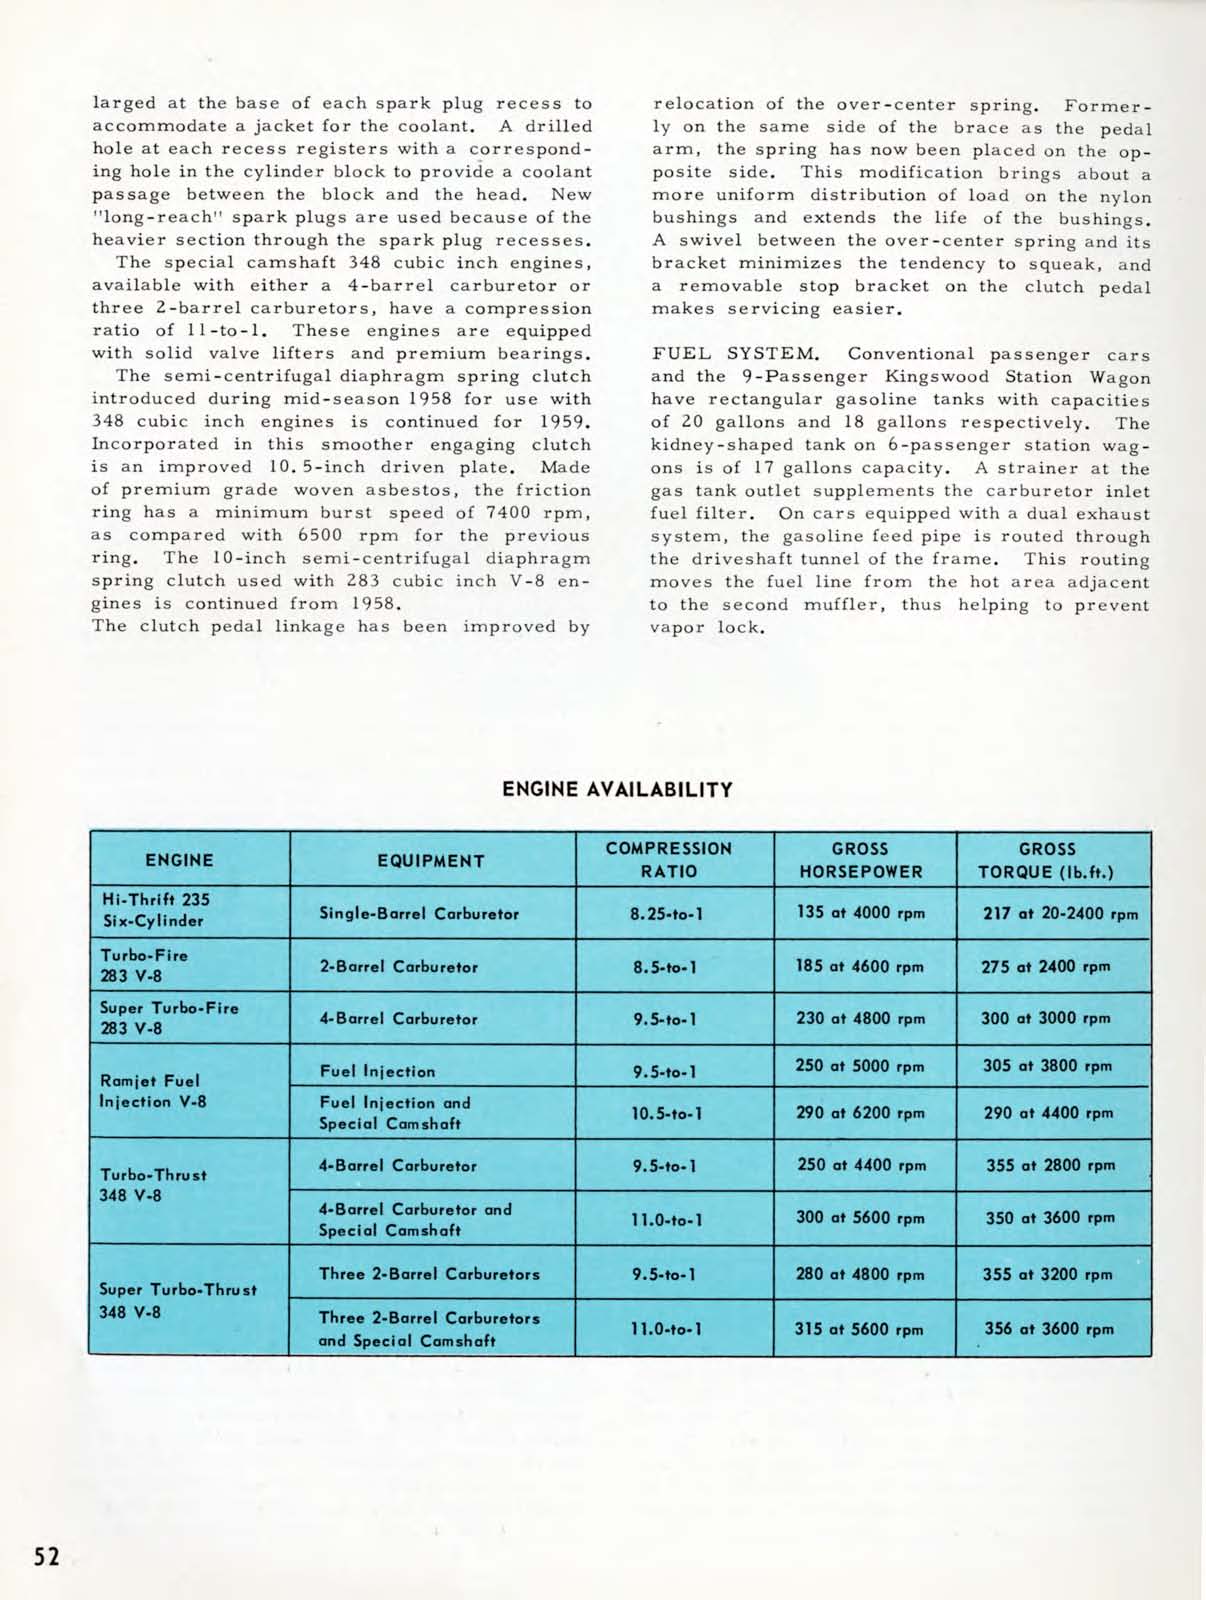 1959_Chevrolet_Engineering_Features-52